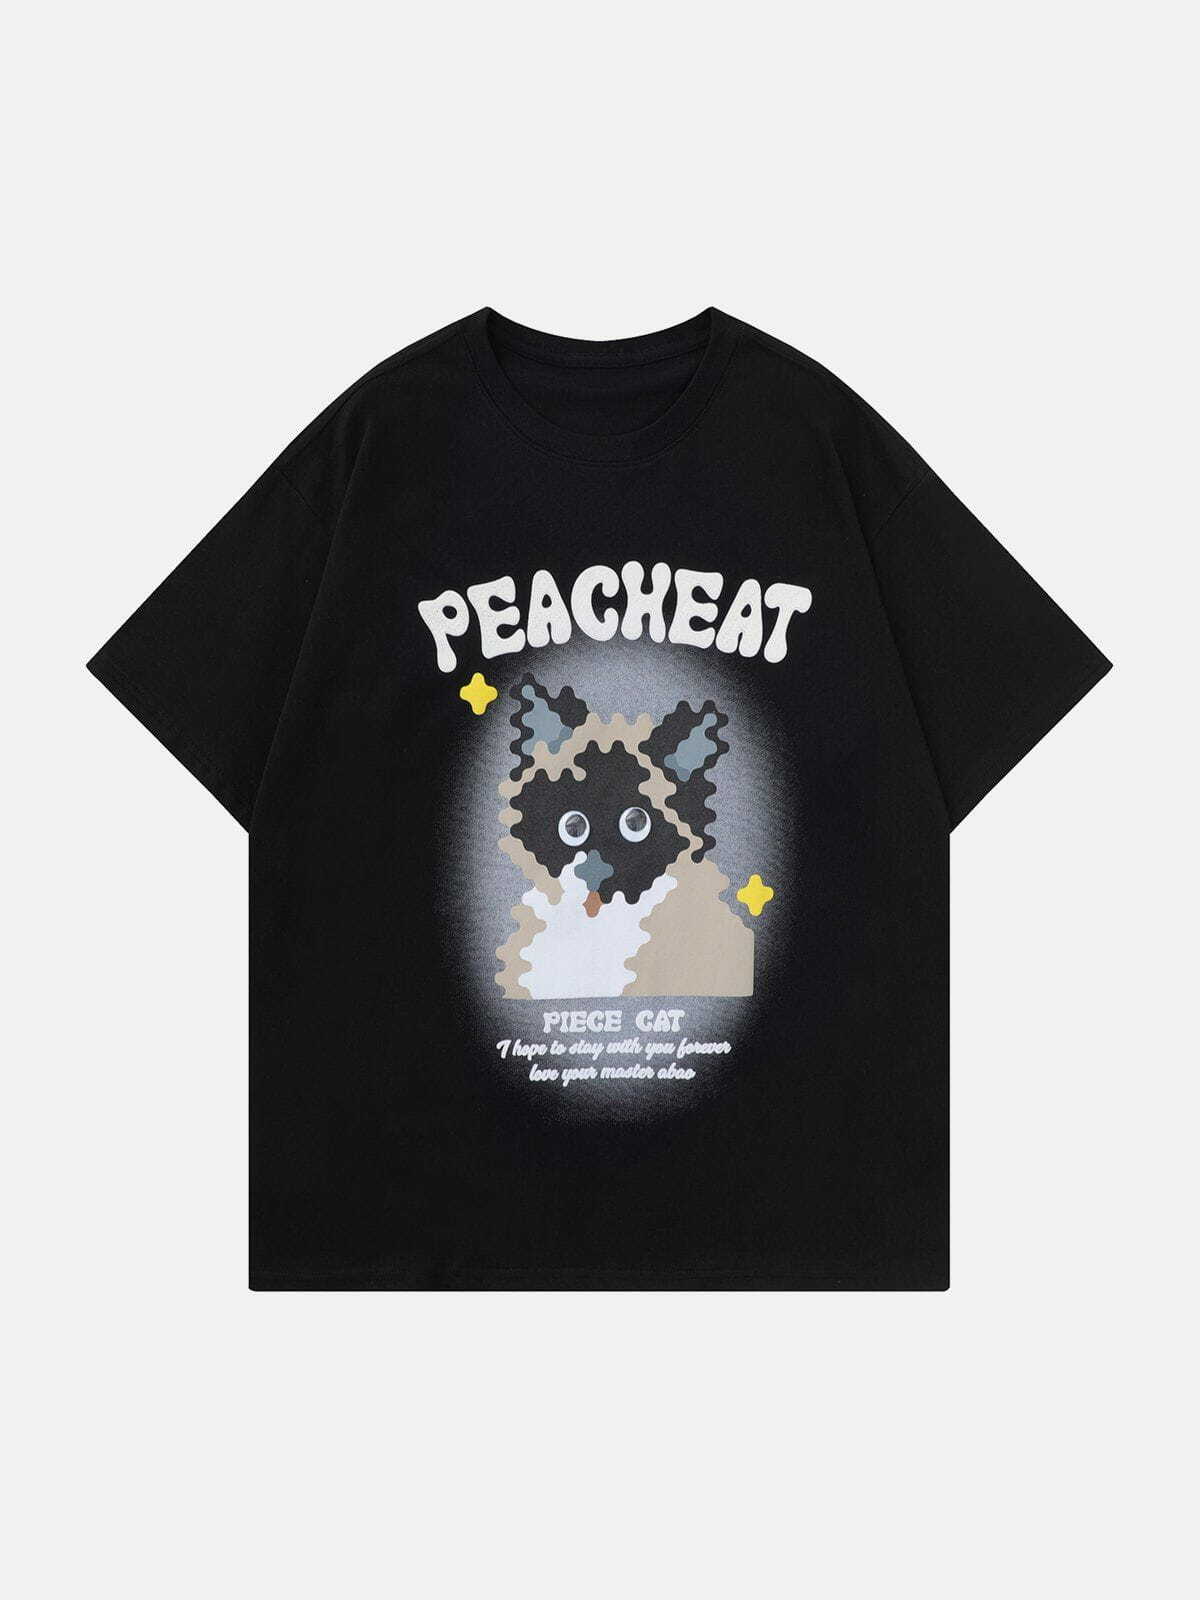 retro cat print tee edgy  vibrant streetwear shirt 6594